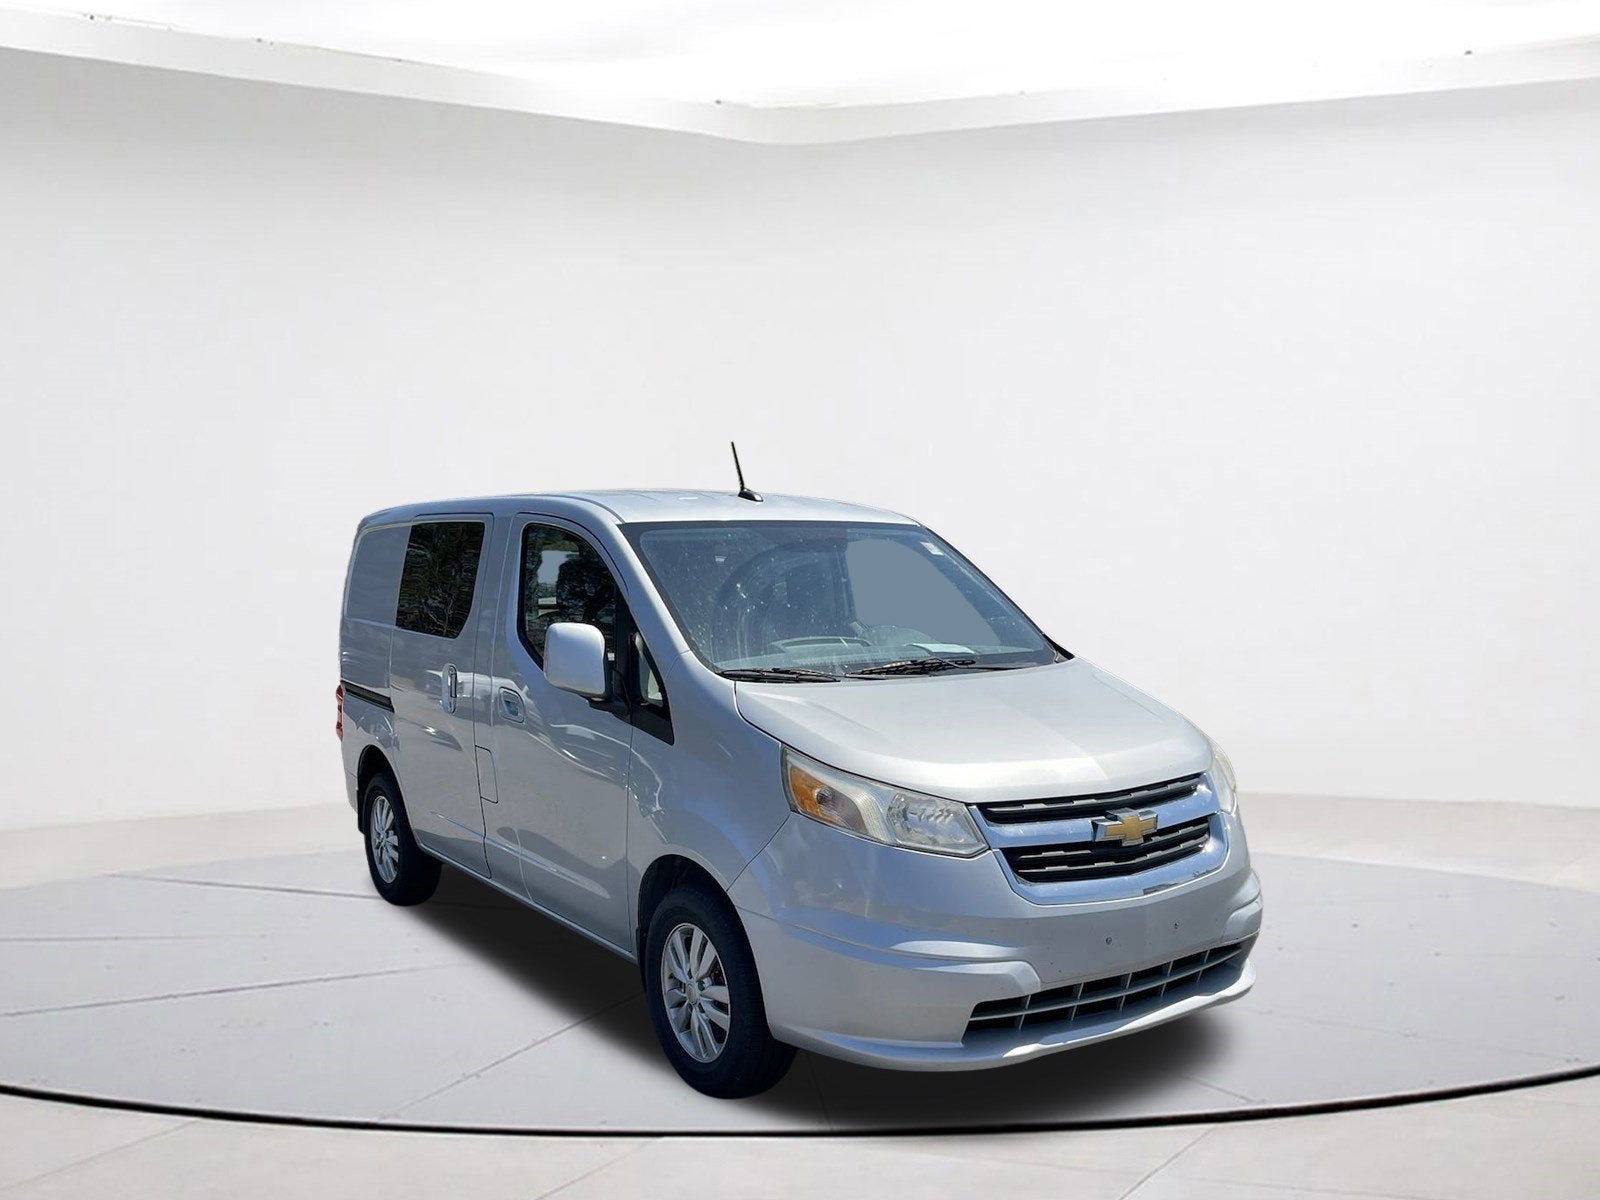 2015 Chevrolet City Express Cargo Van LT